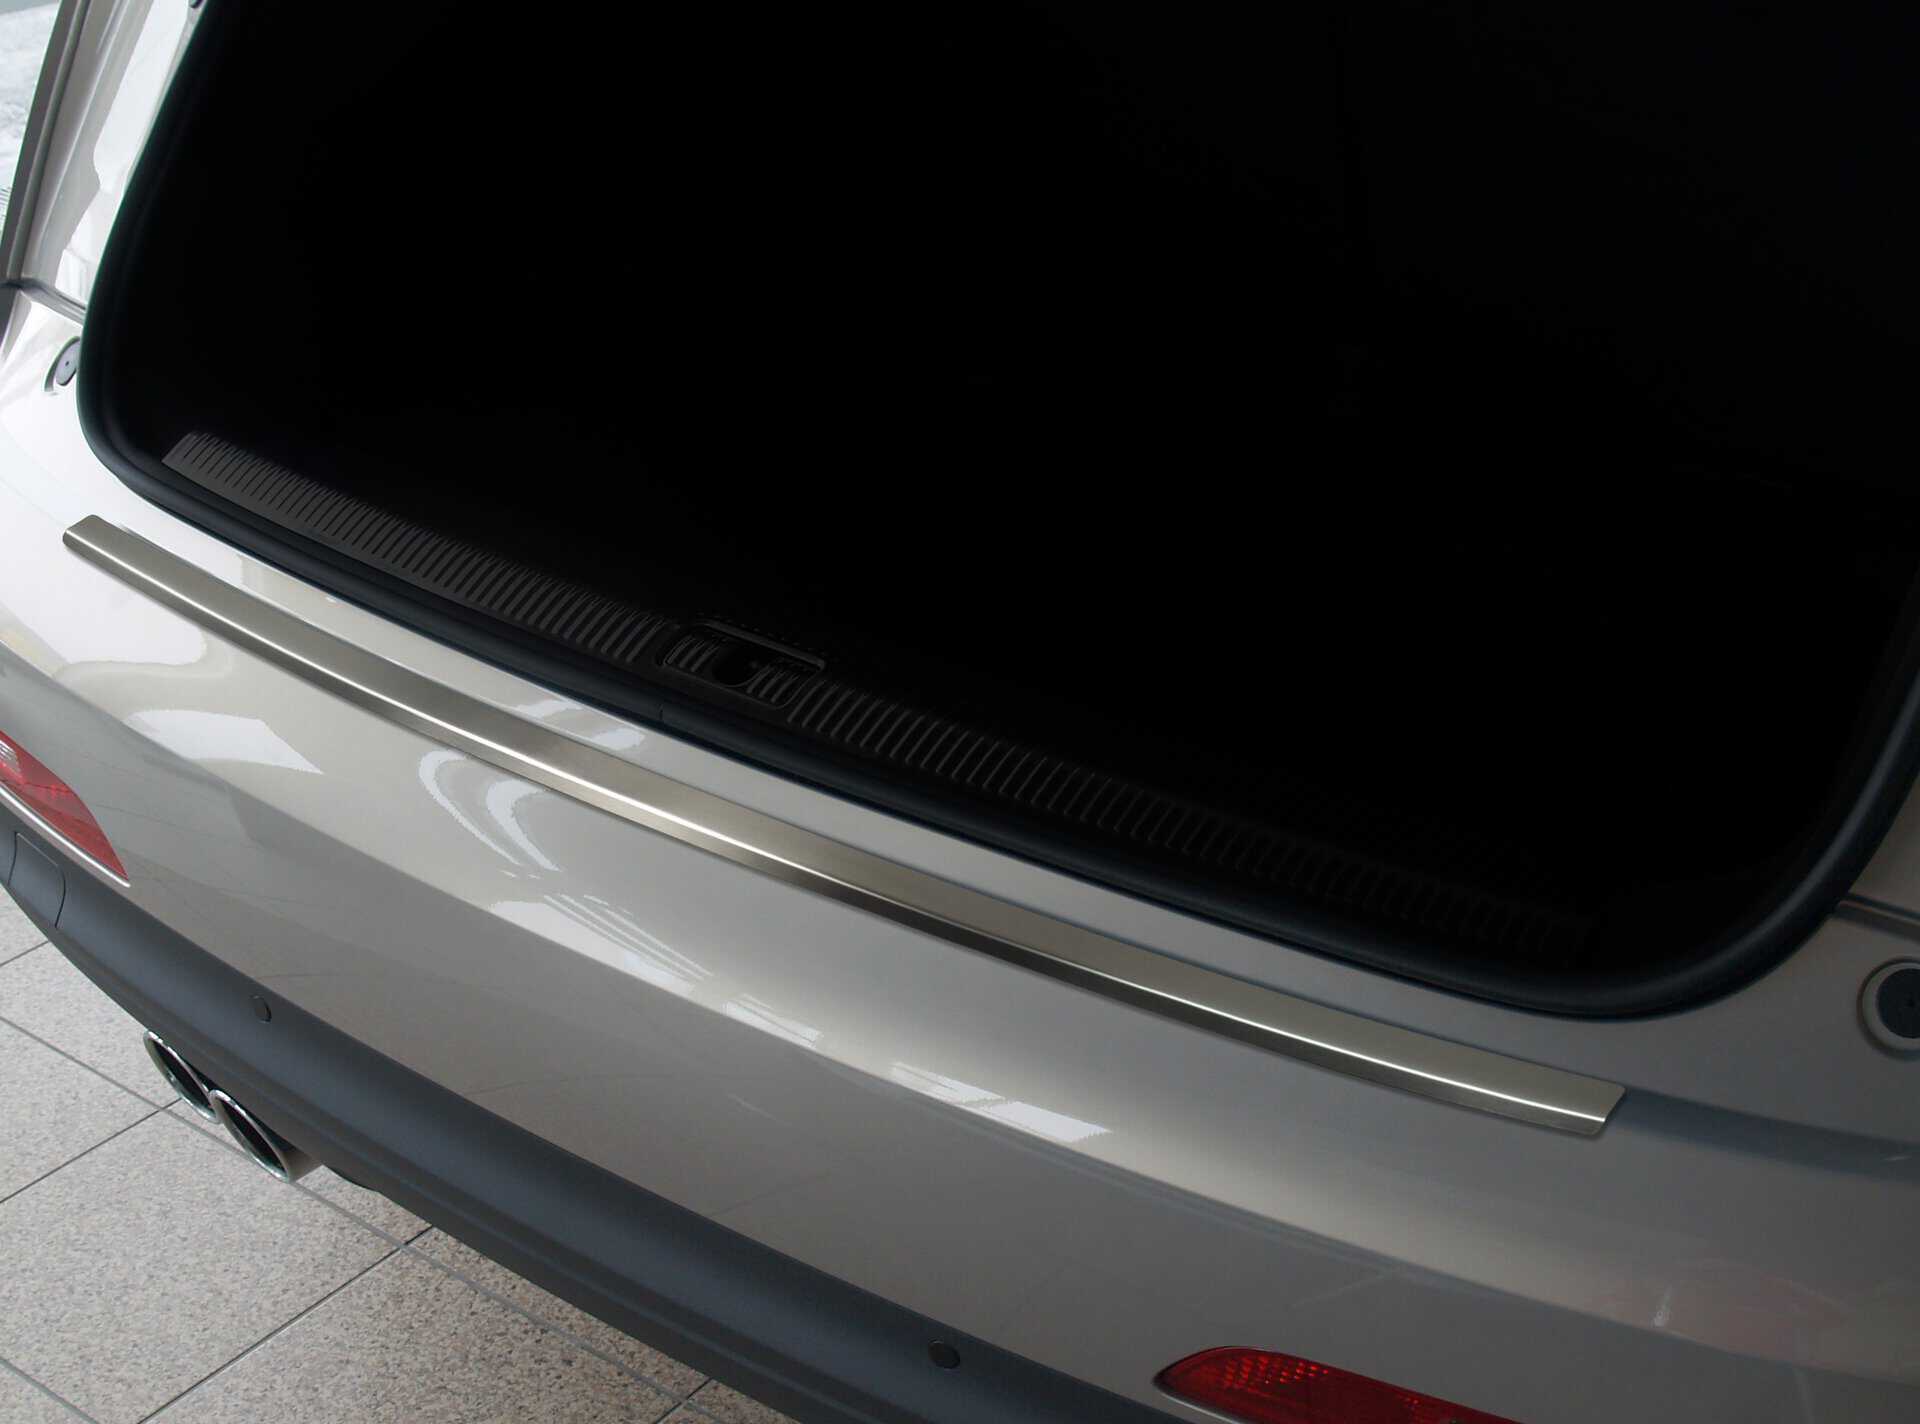 Hess Automobile - Ladekantenschutz Folie transparent Original Audi Q3  Kofferraum Ladekante Schutzfolie